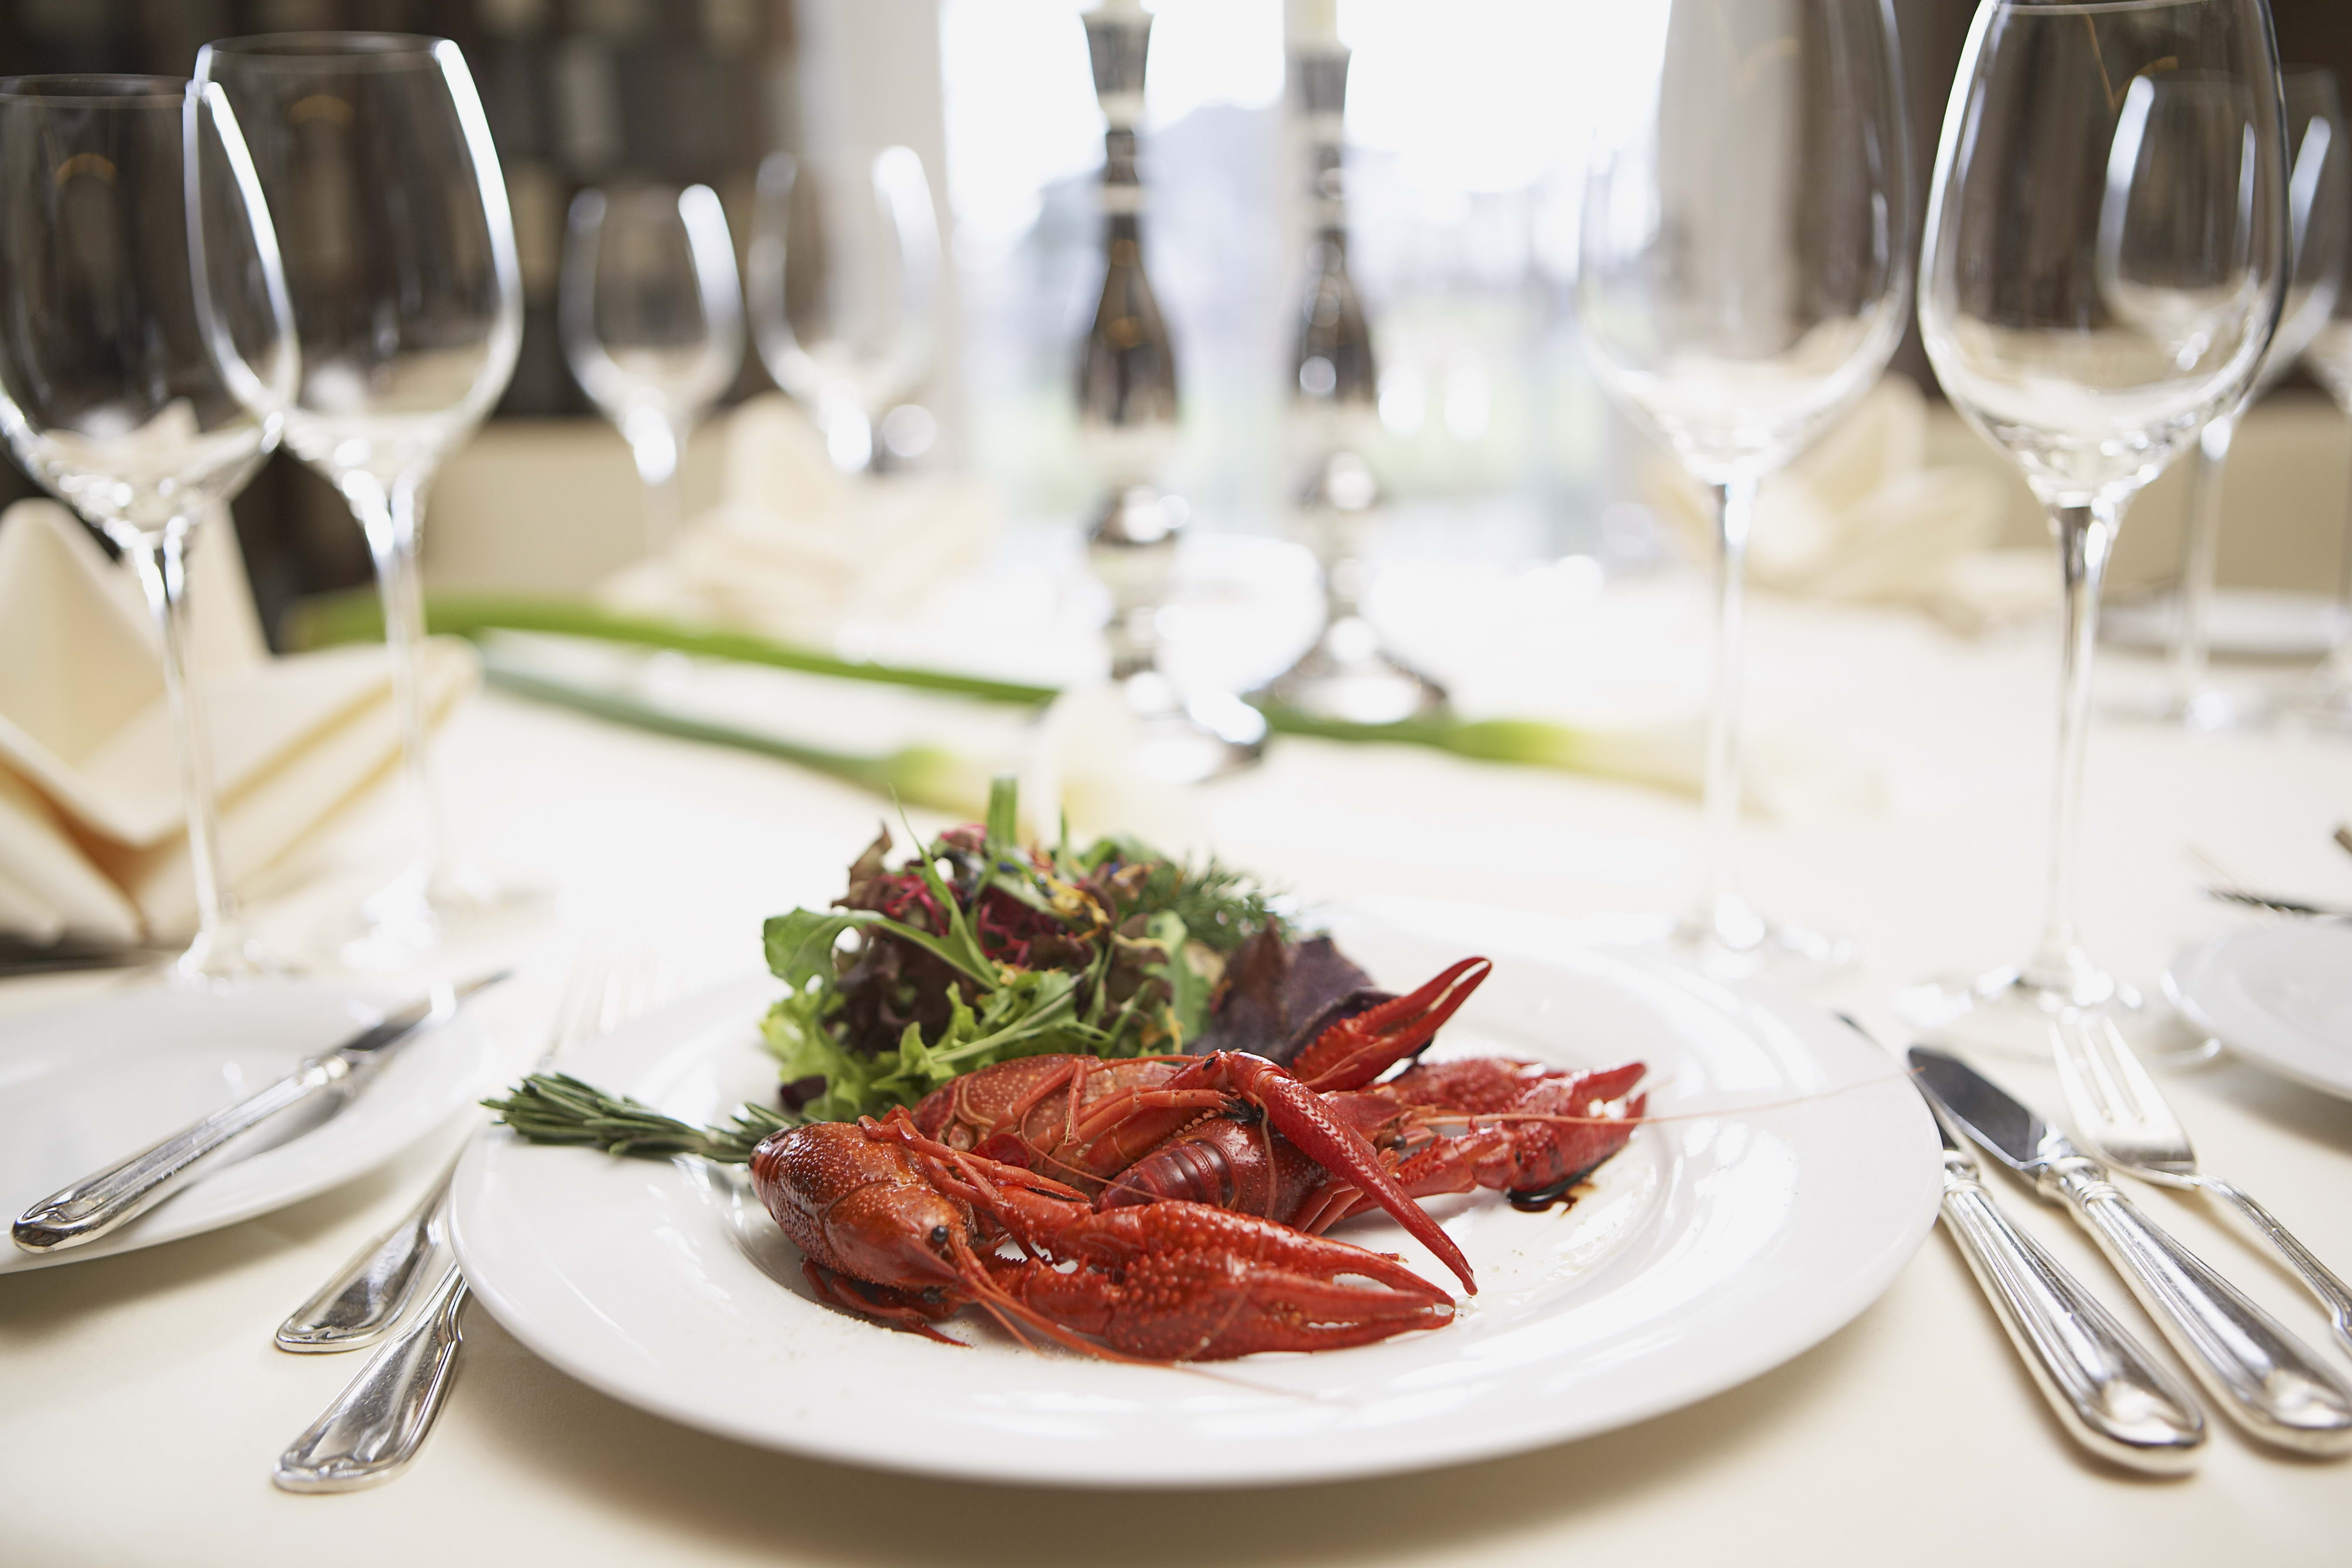 fried dish, crayfish, plate, salad, restaurant, dinner, food